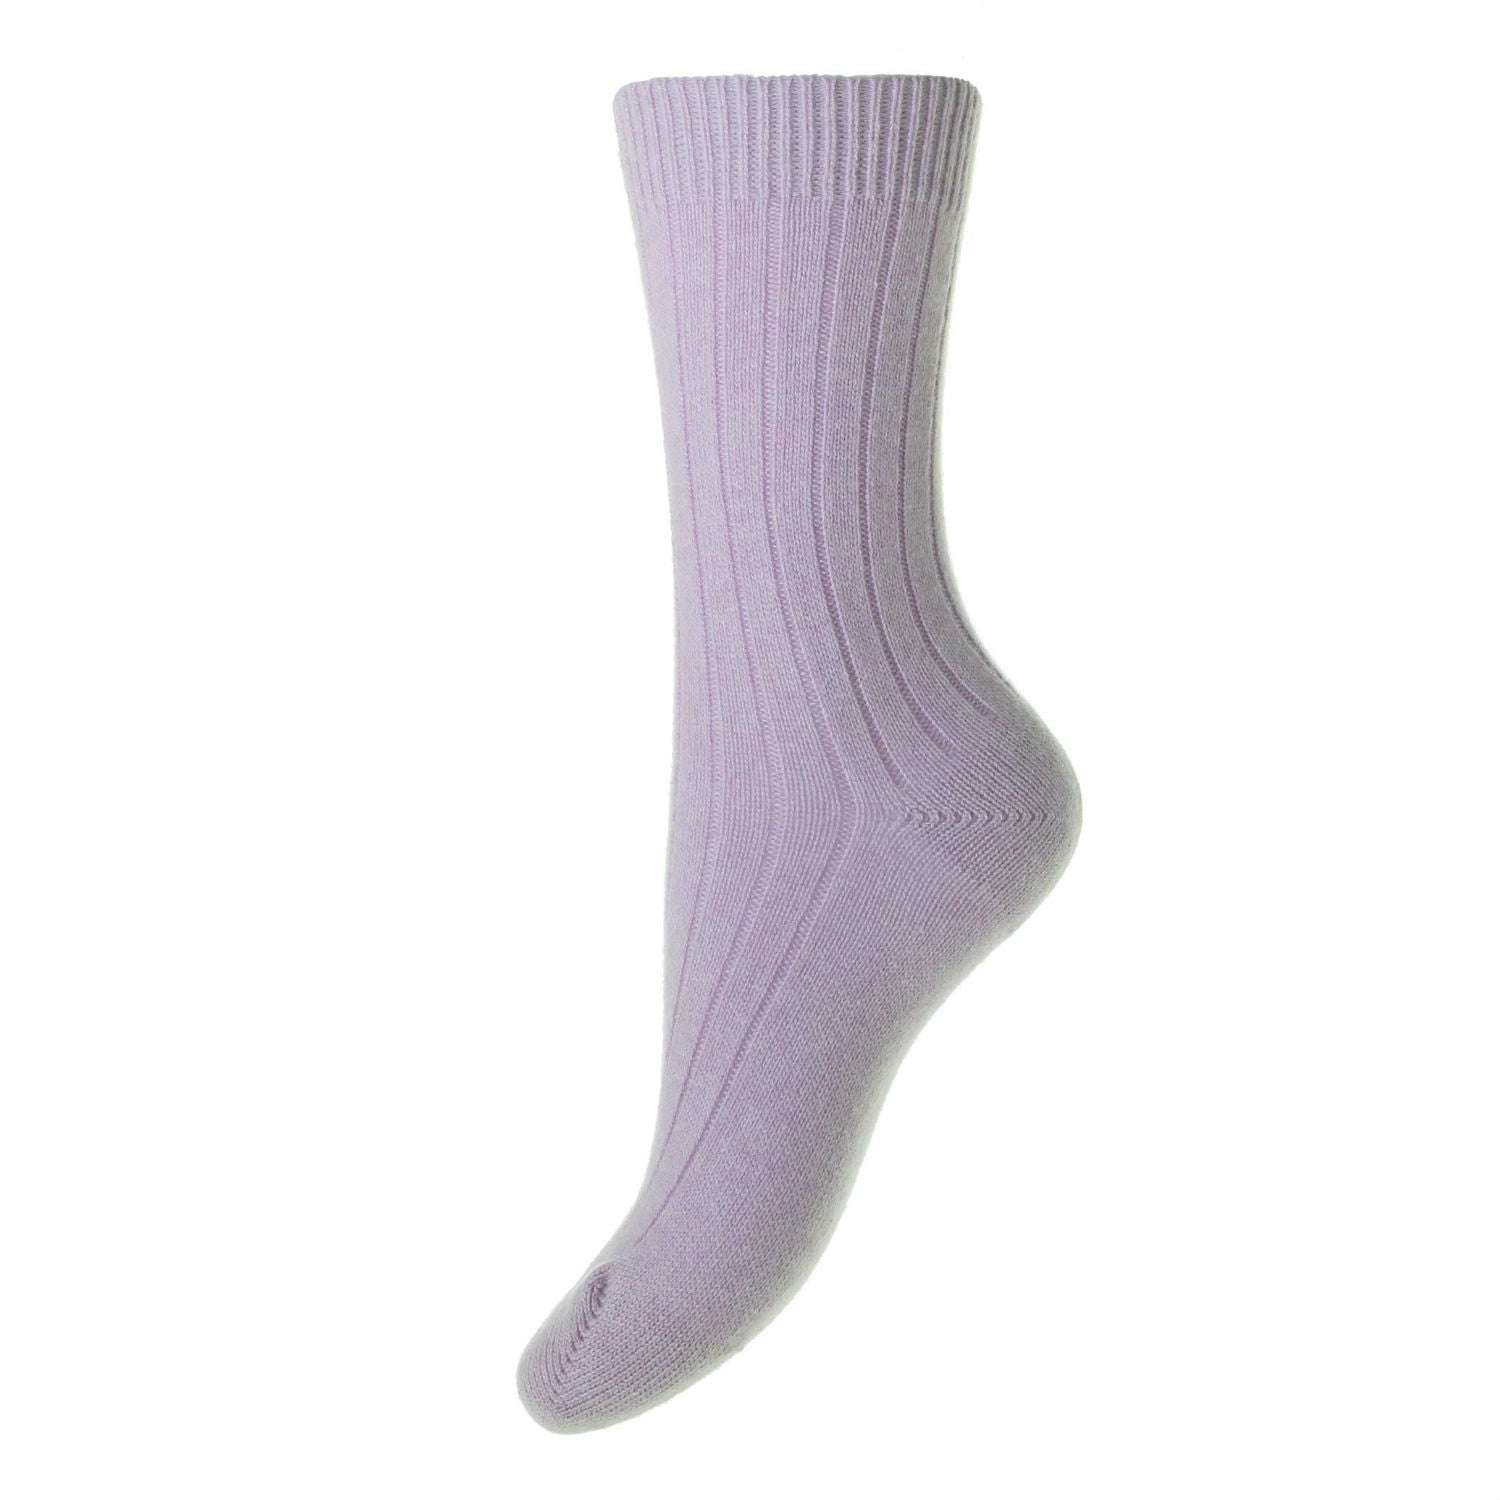 Pantherella women's socks - Lilac cashmere 